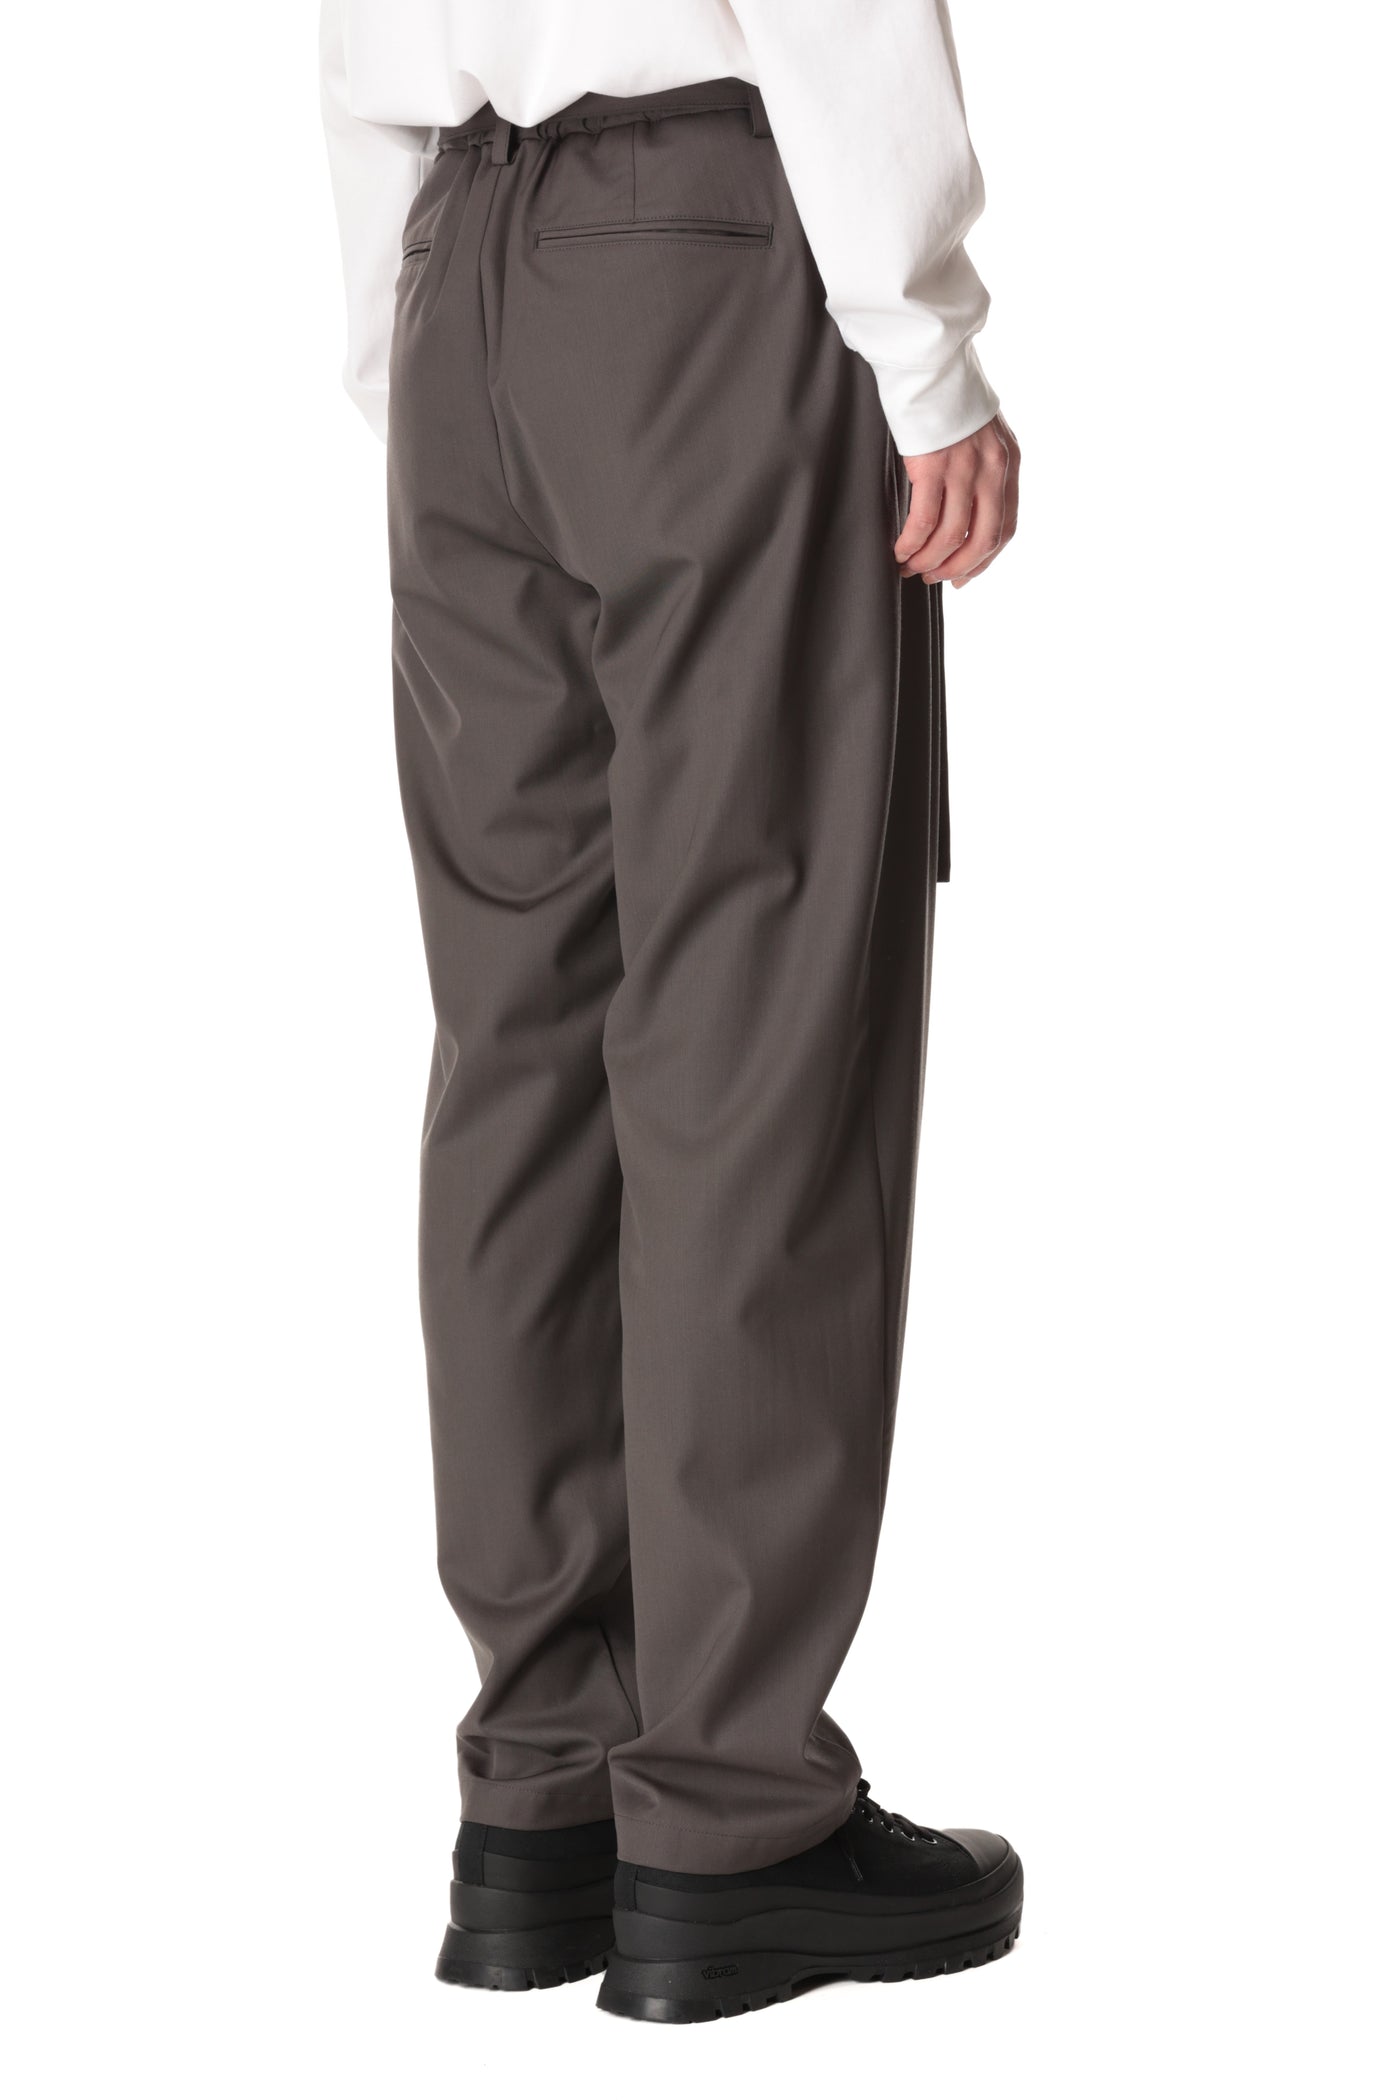 AP32-042 Wool gabardine 2-tuck wide tapered pants with belt